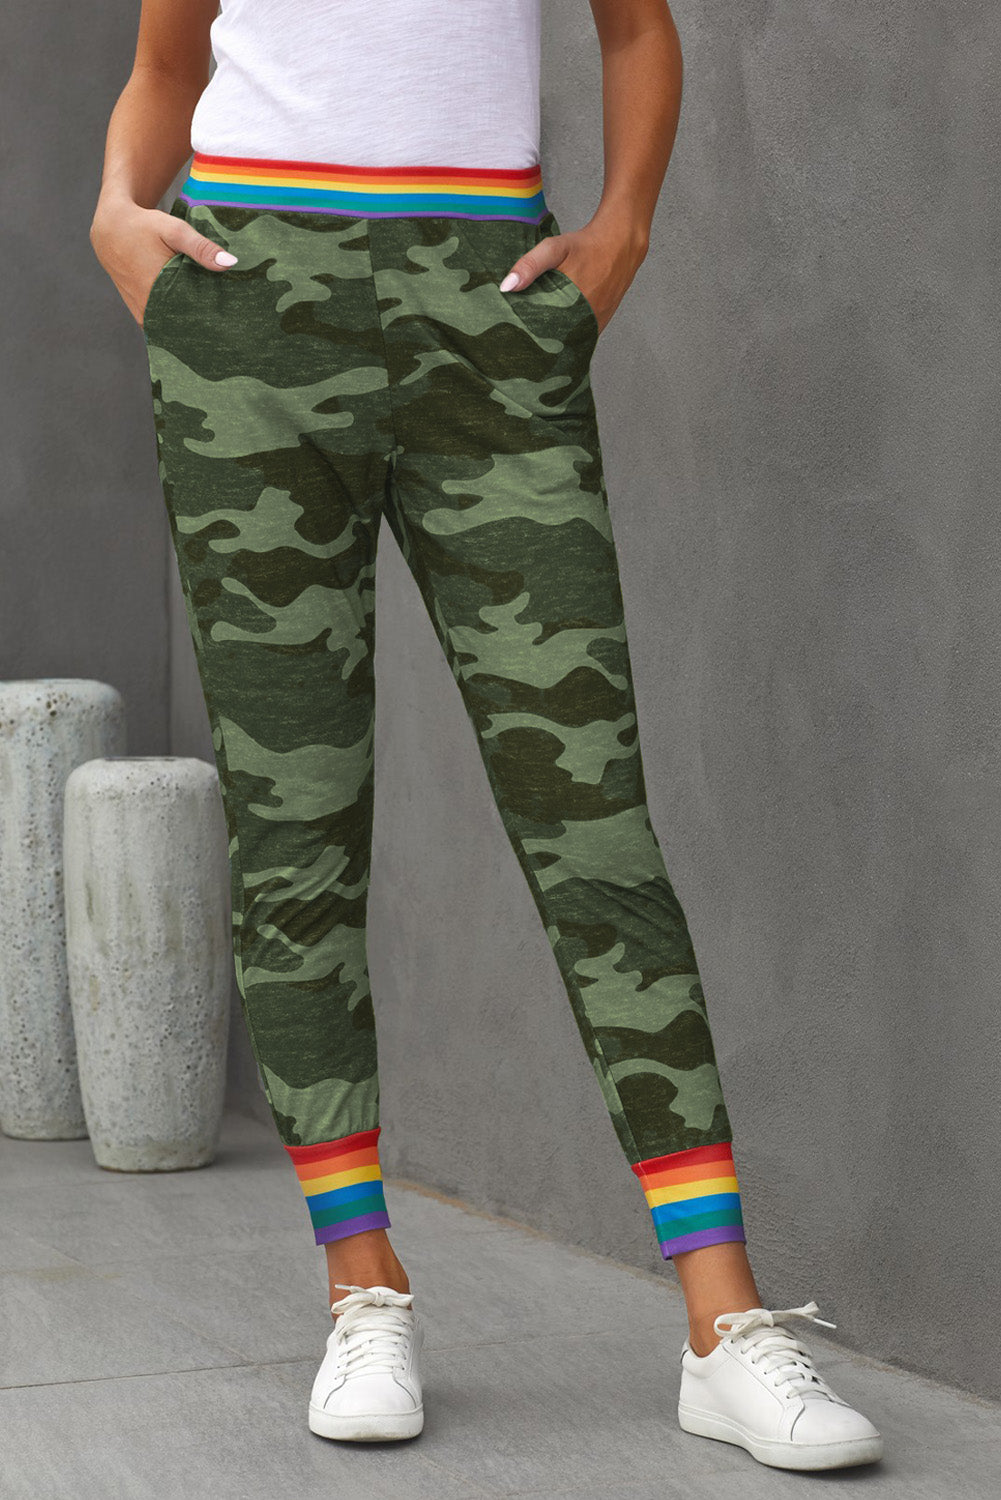 Rainbow Stripe Gray Camo Casual Pants